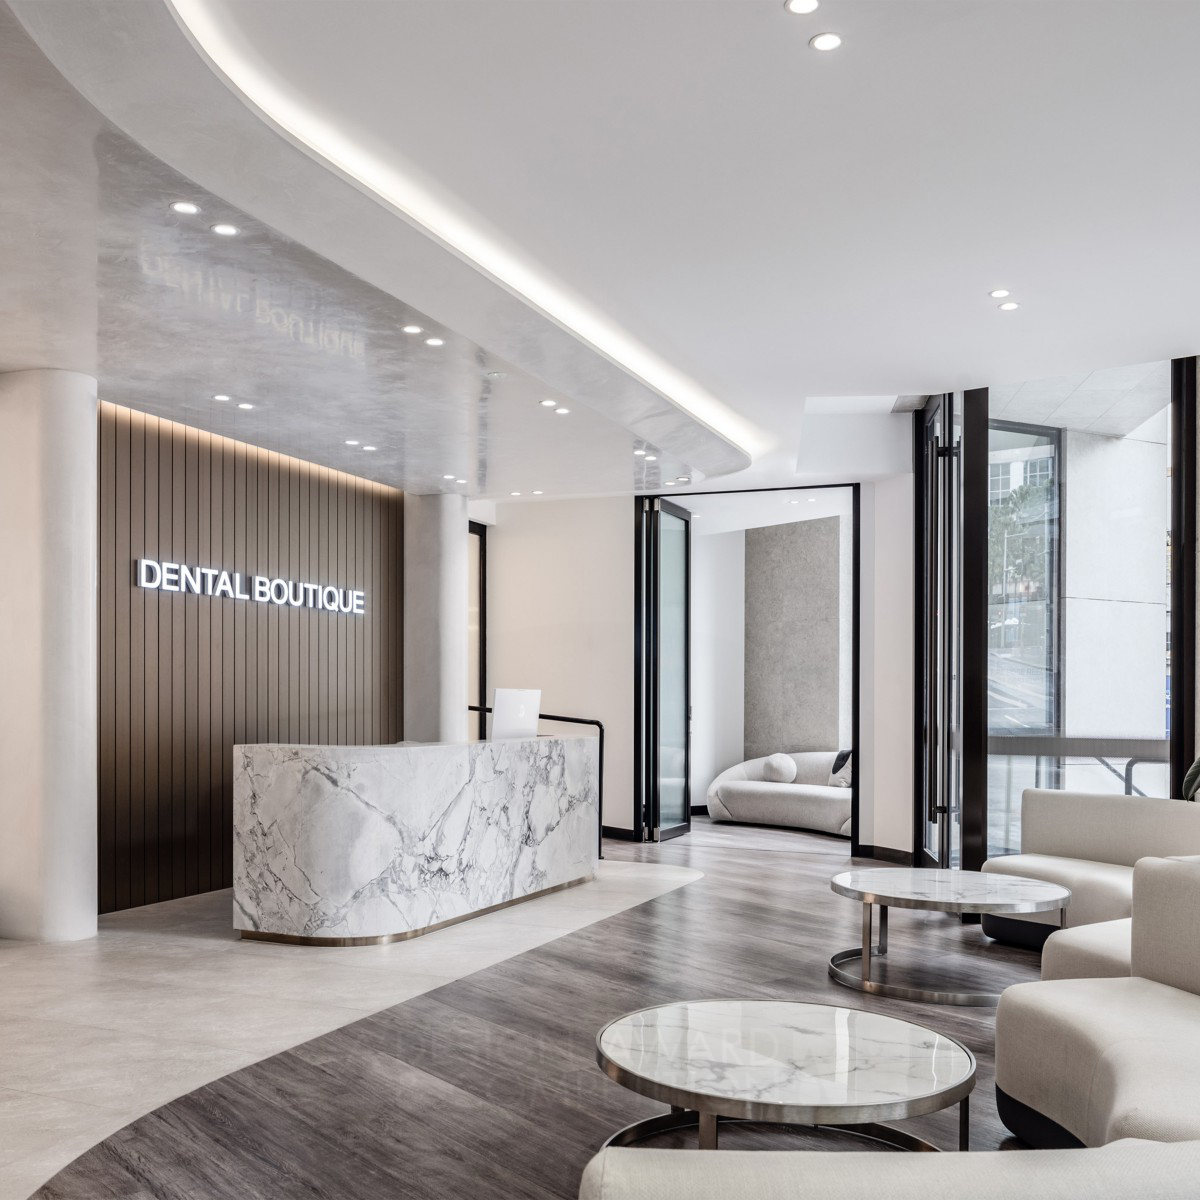 Sydney Dental Boutique Interior Design  by Antry Lau